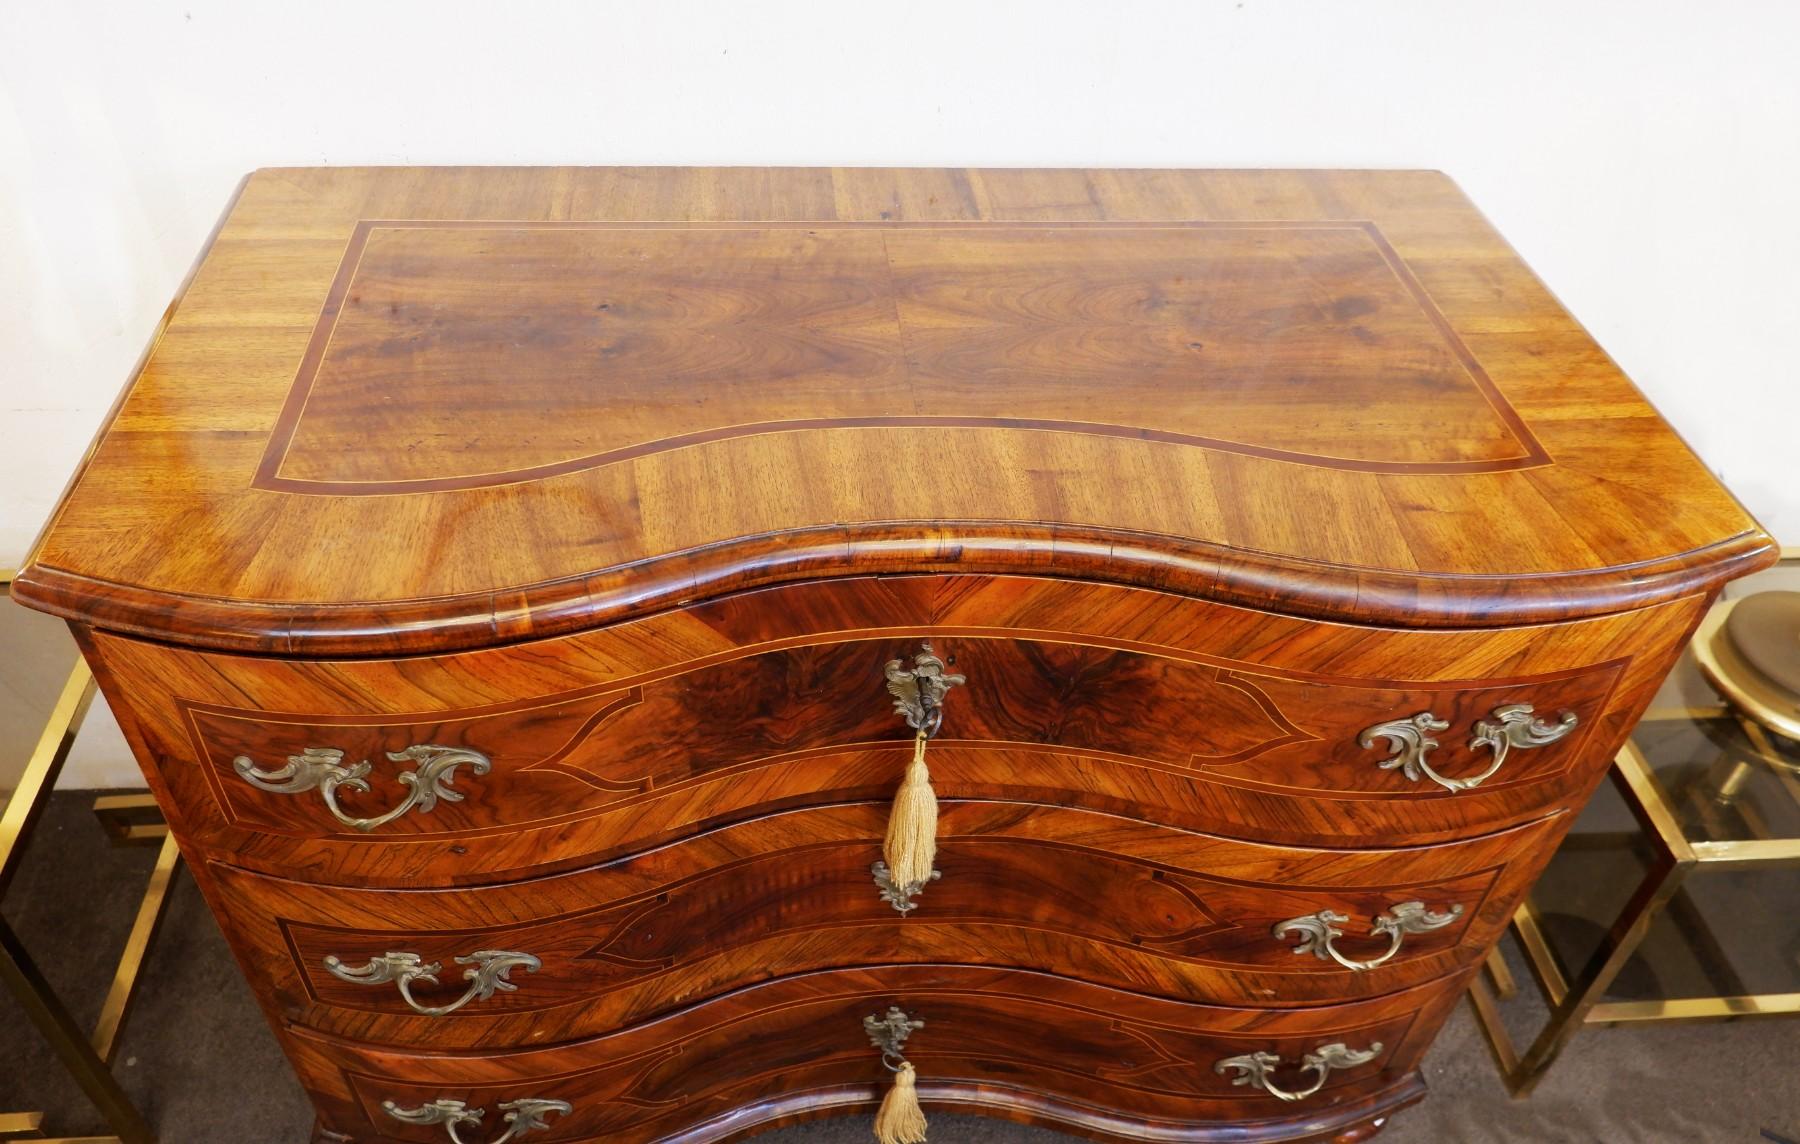 18th century German Baroque chest of drawers, walnut.